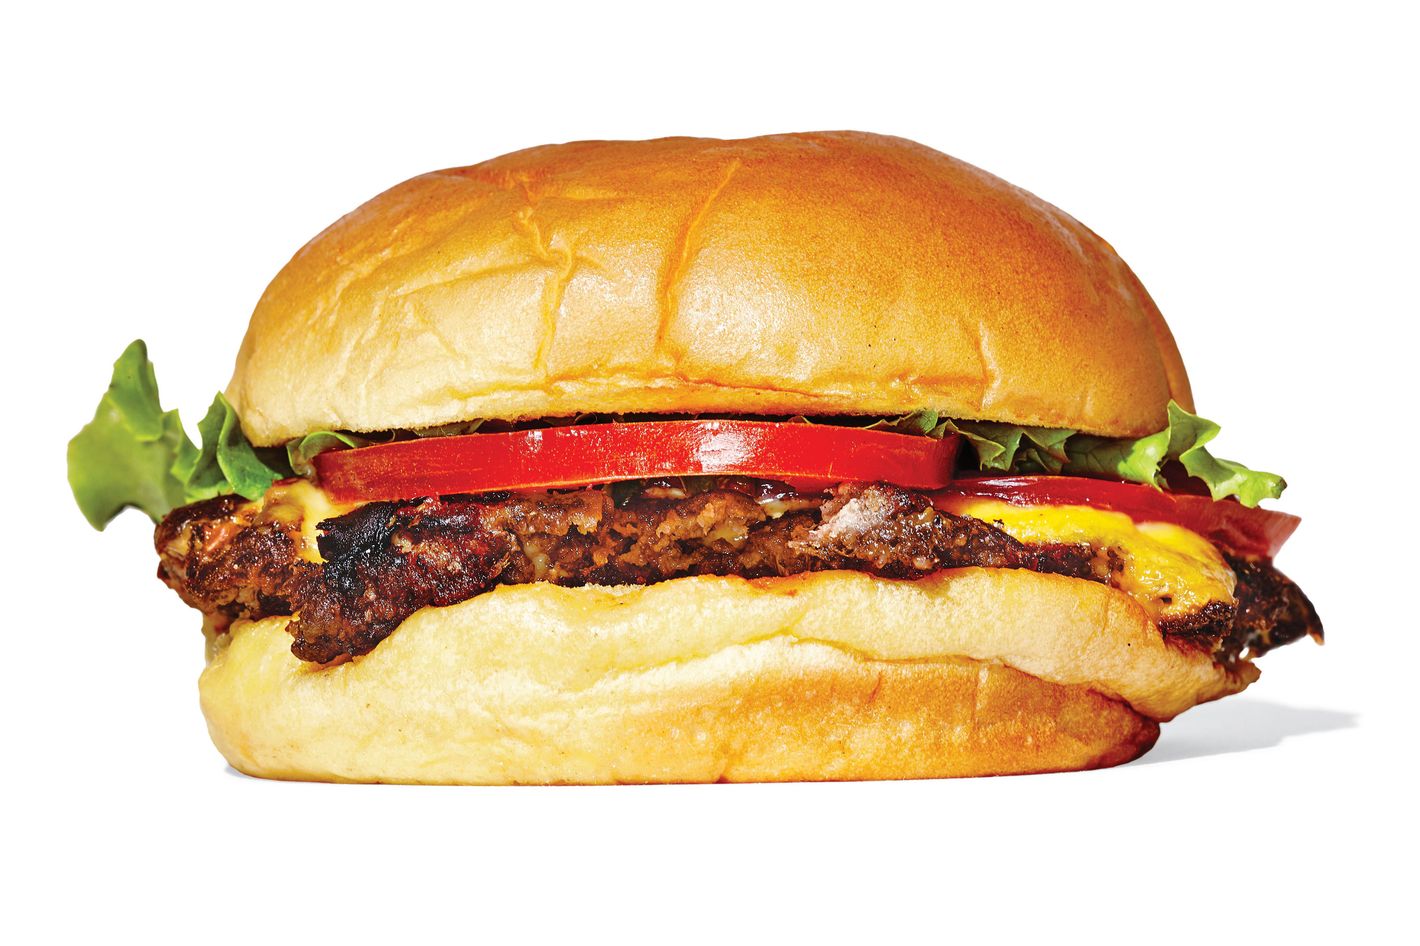 Hamburger Smasher for Shake Shack